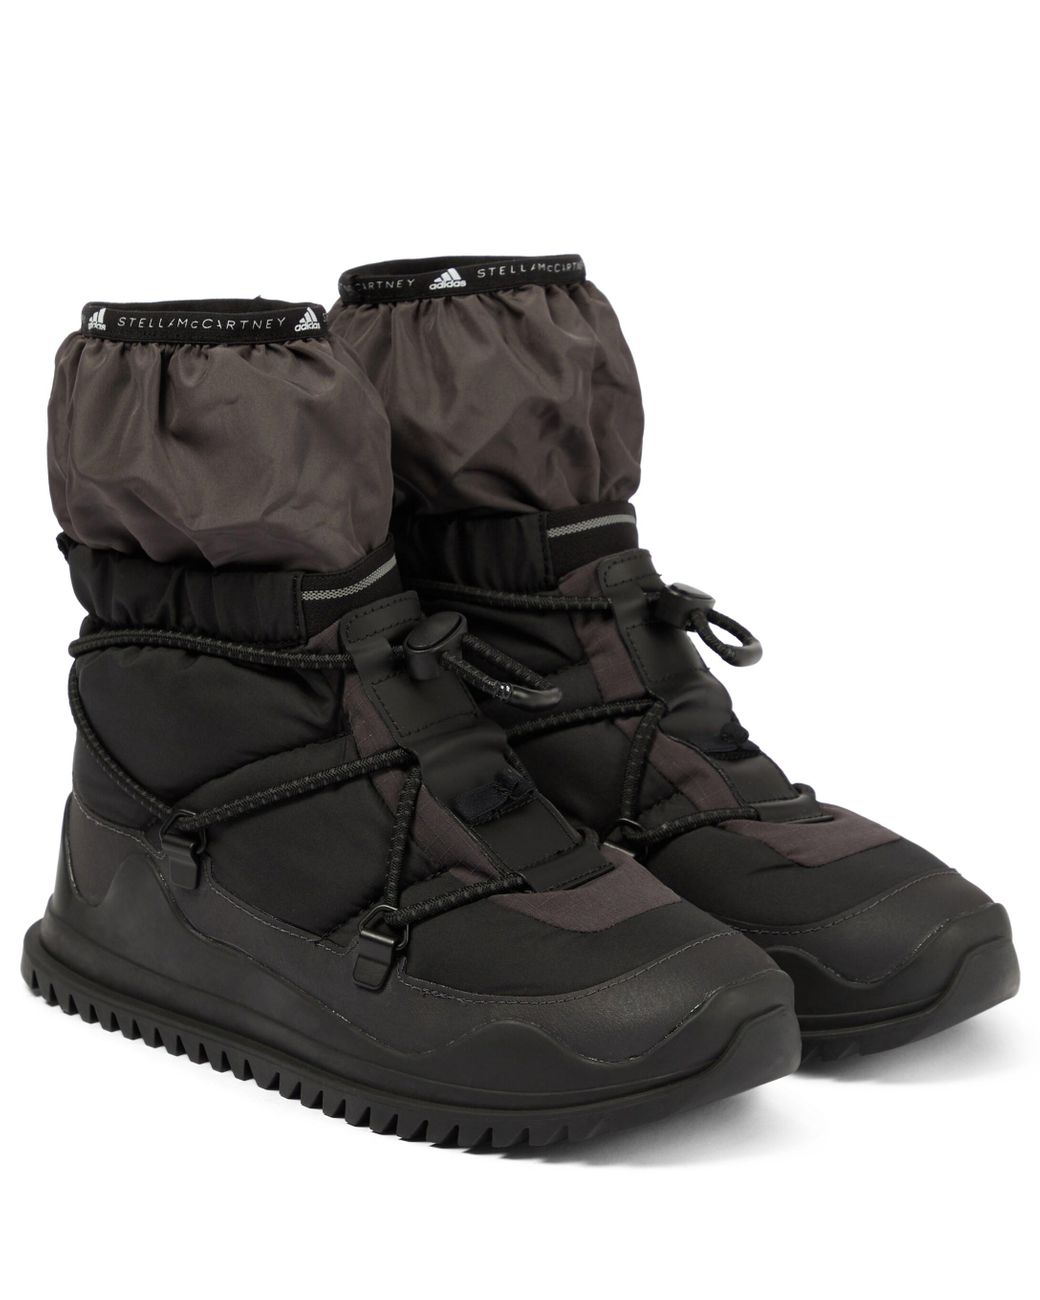 adidas By Stella McCartney Winter Snow Boots in Black | Lyst Canada